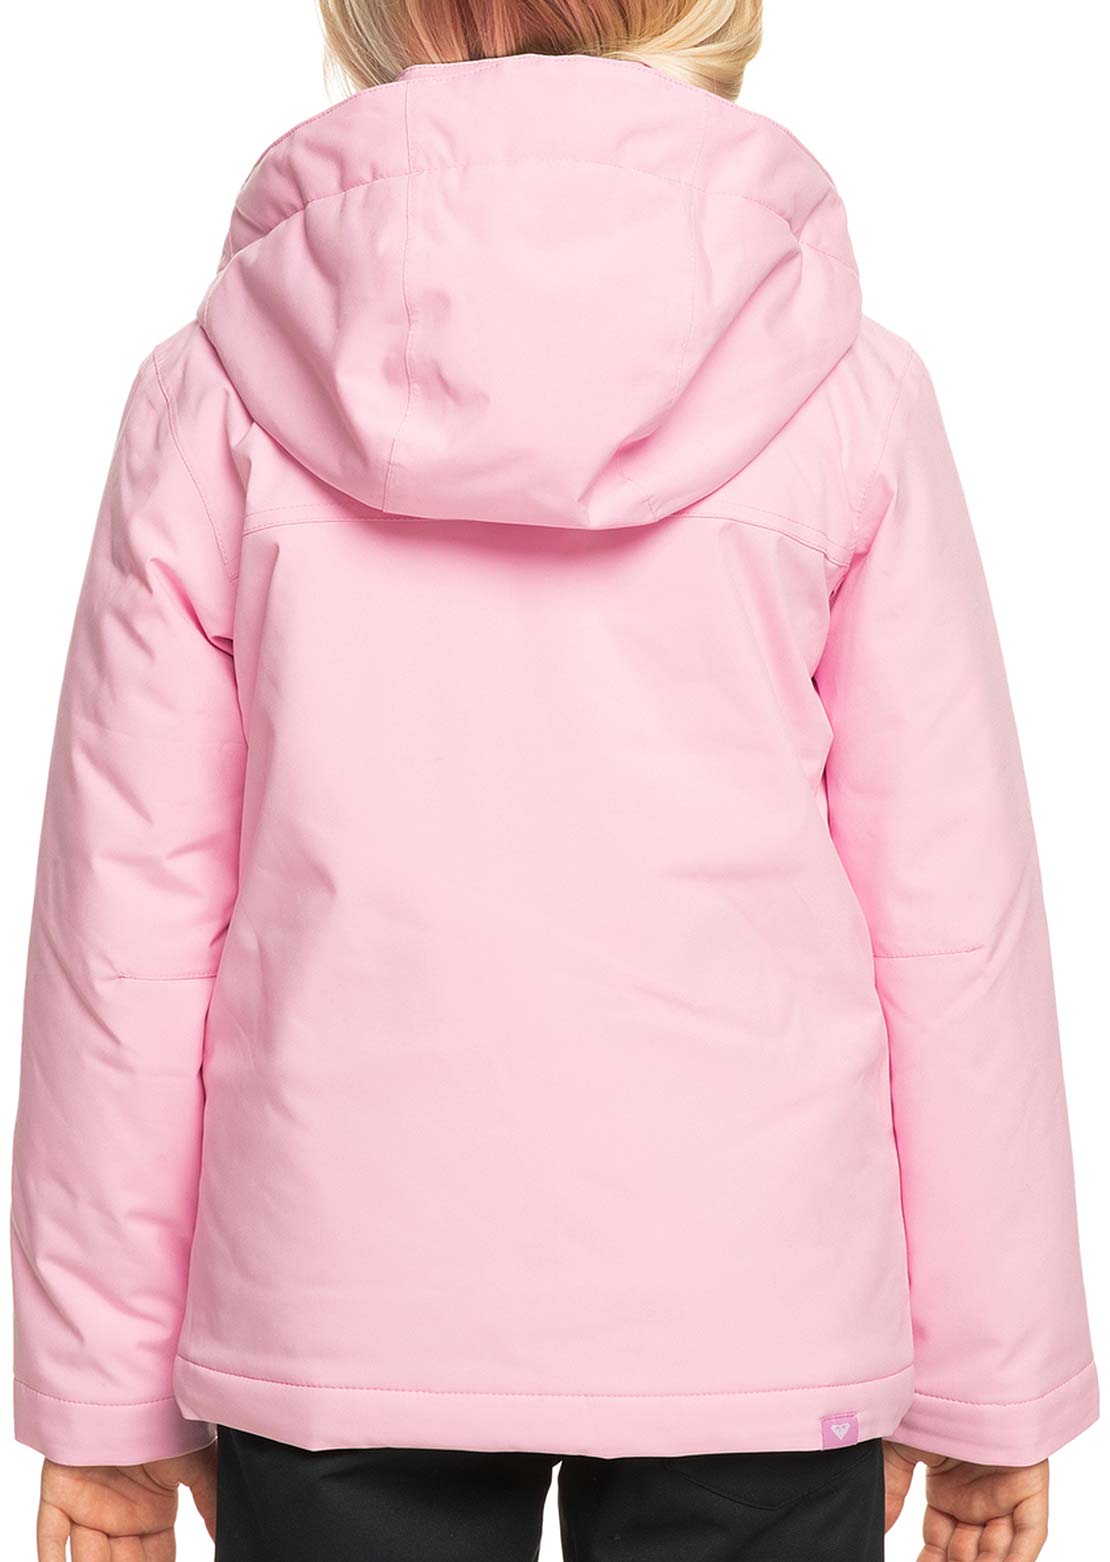 Roxy Junior Galaxy Jacket Pink Frosting